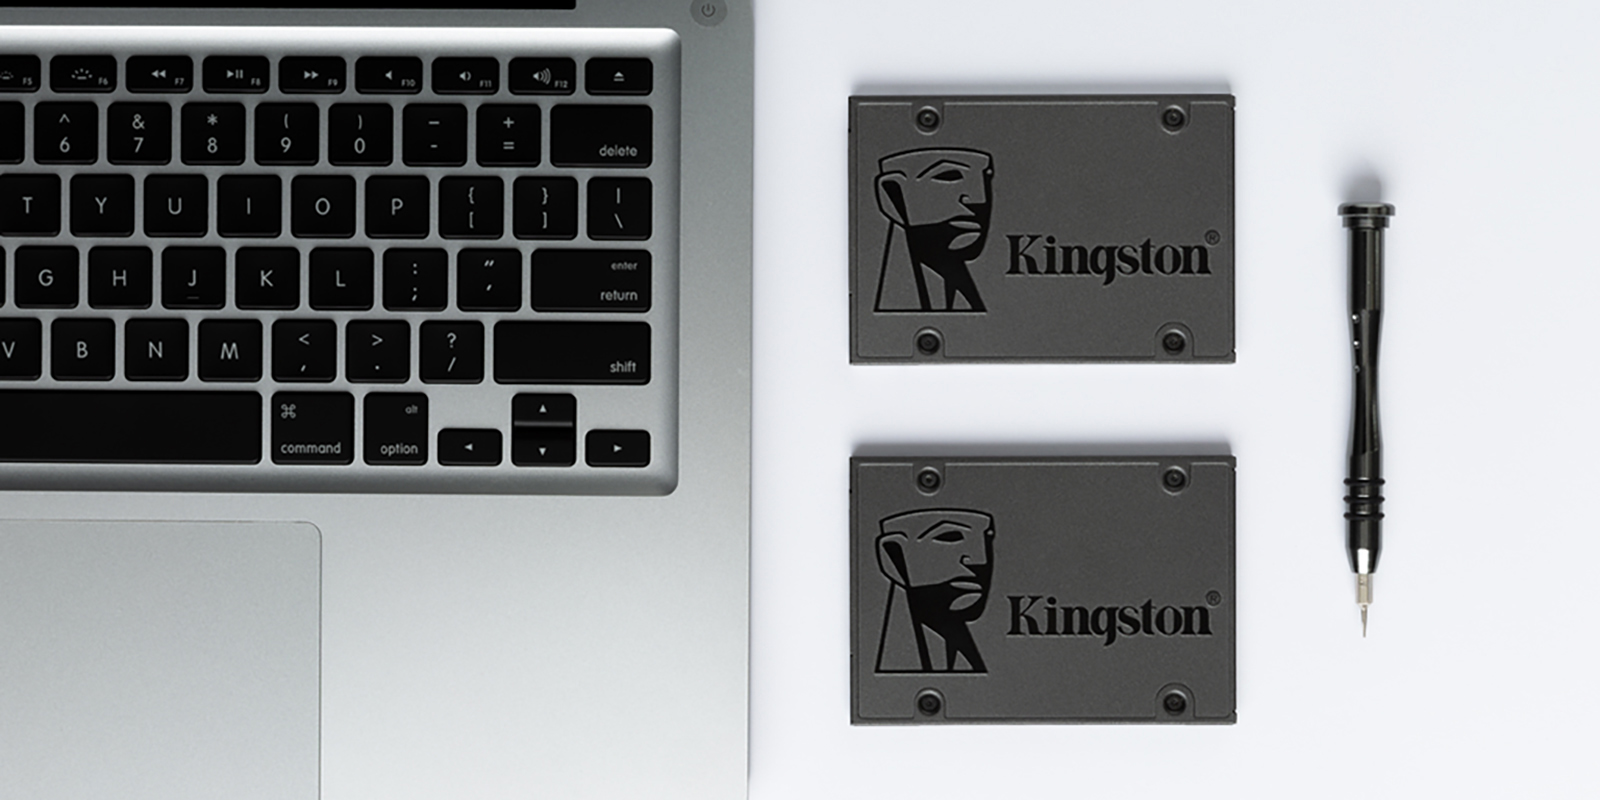 Kingston SATA III Disco SSD 240 GB 120GB A400 Internal Solid State Drive  2.5 Inch HDD Hard Disk 480GB Hard Drive 960GB Notebook